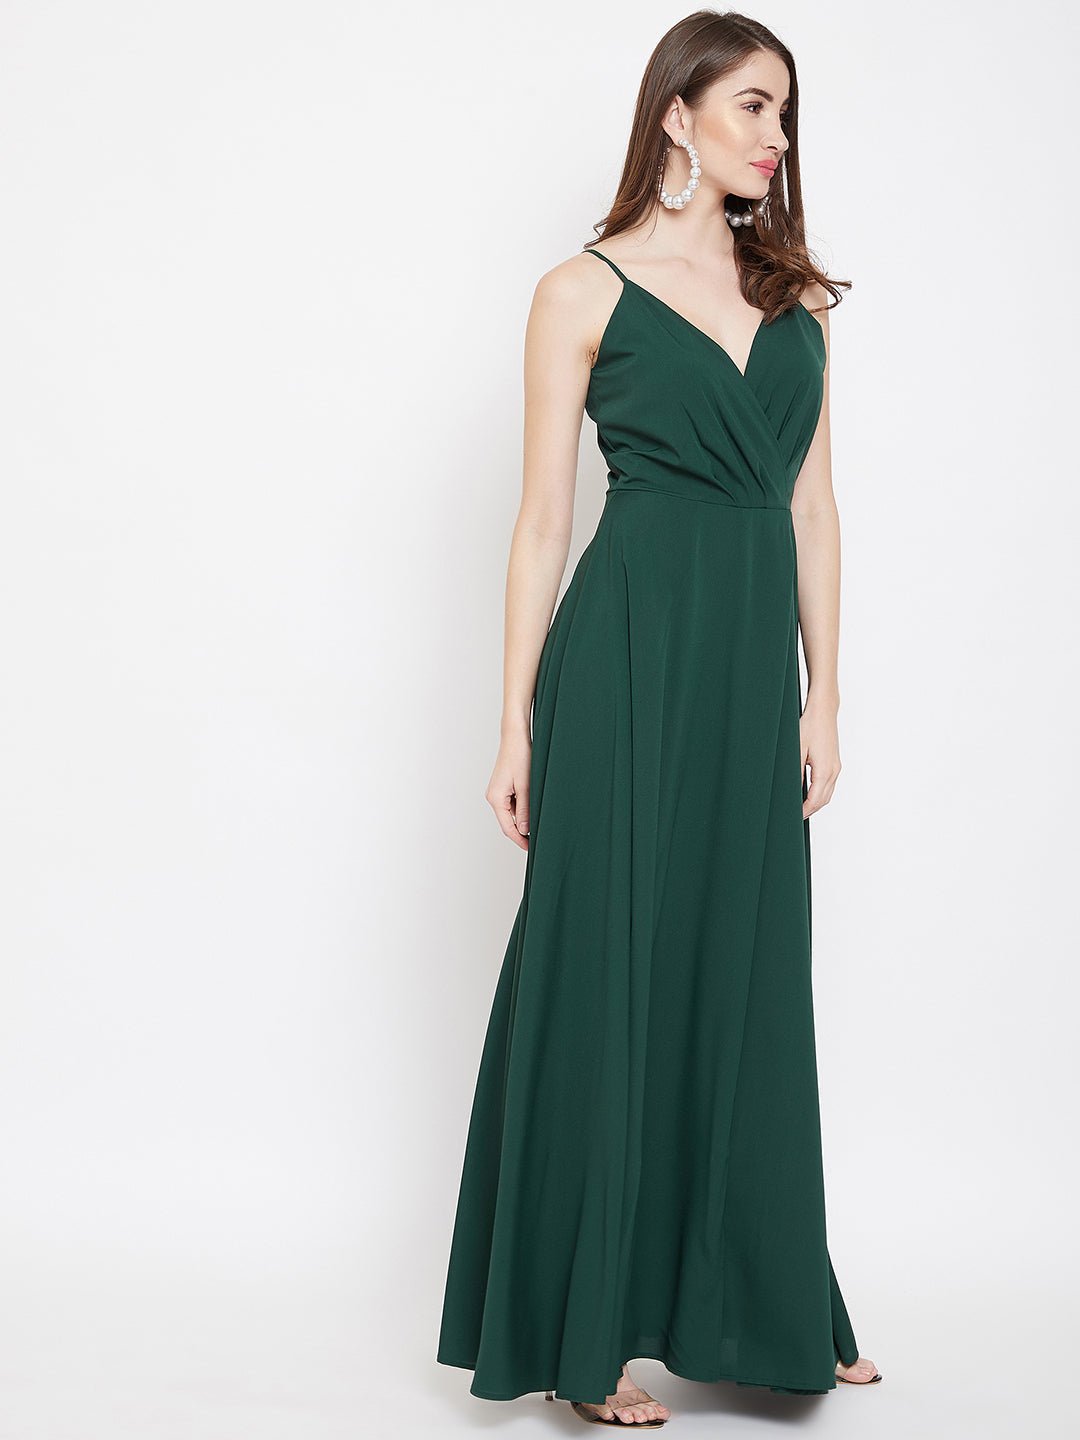 Folk Republic Women Solid Green V-Neck Sleeveless Crepe Thigh-High Slit A-Line Maxi Dress - #folk republic#